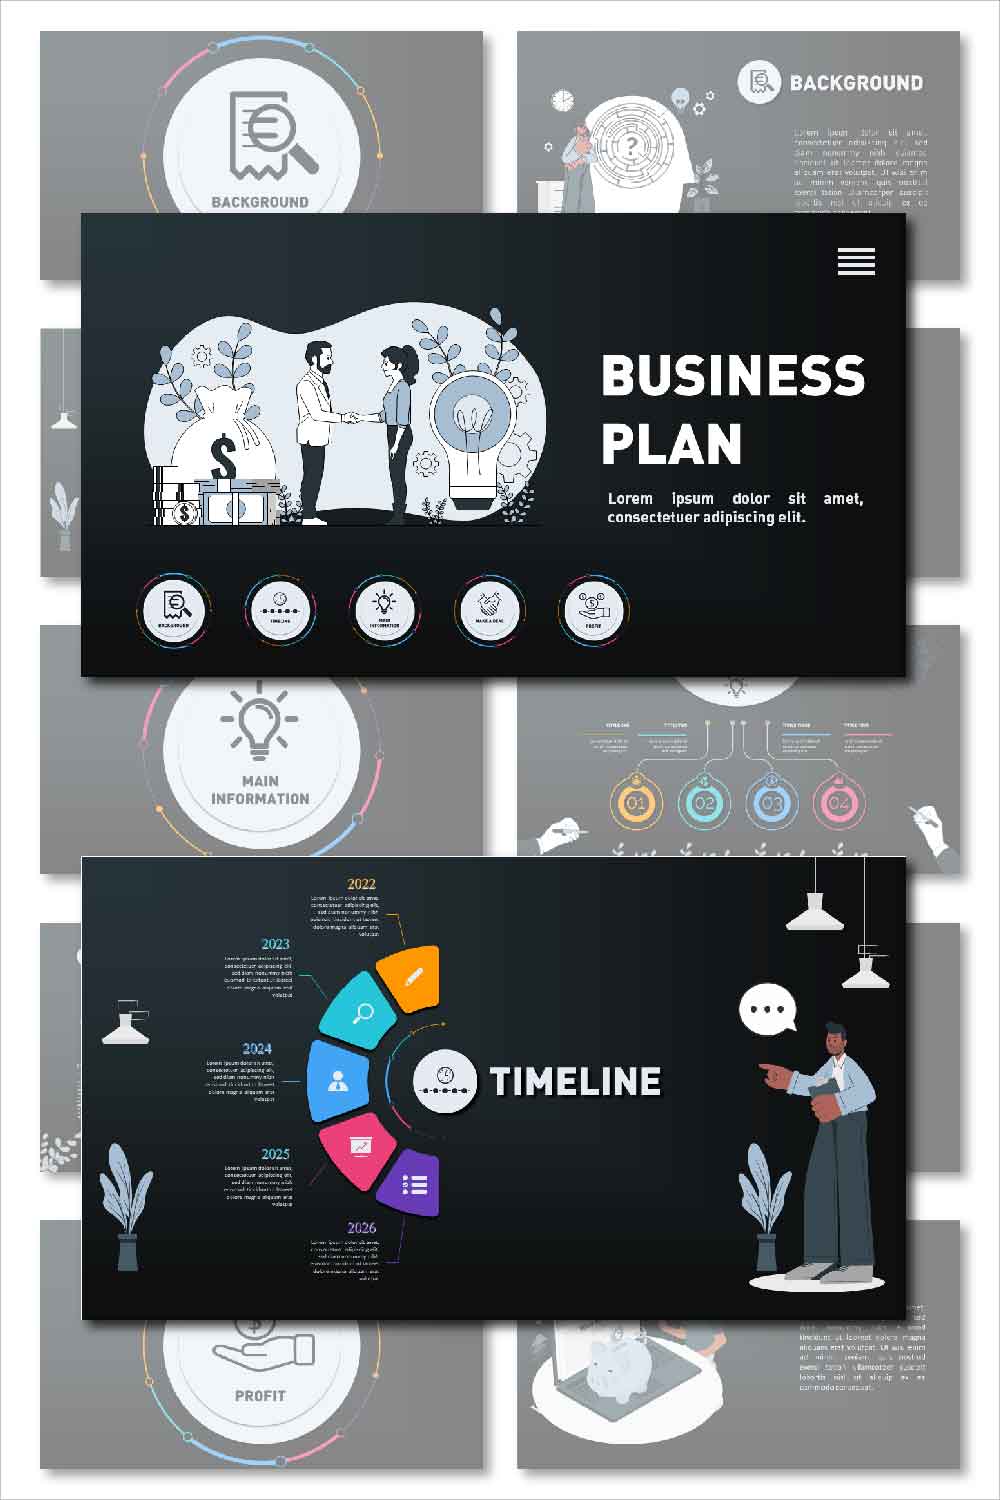 Business Plan Presentation PowerPoint Template Pinterest Image.